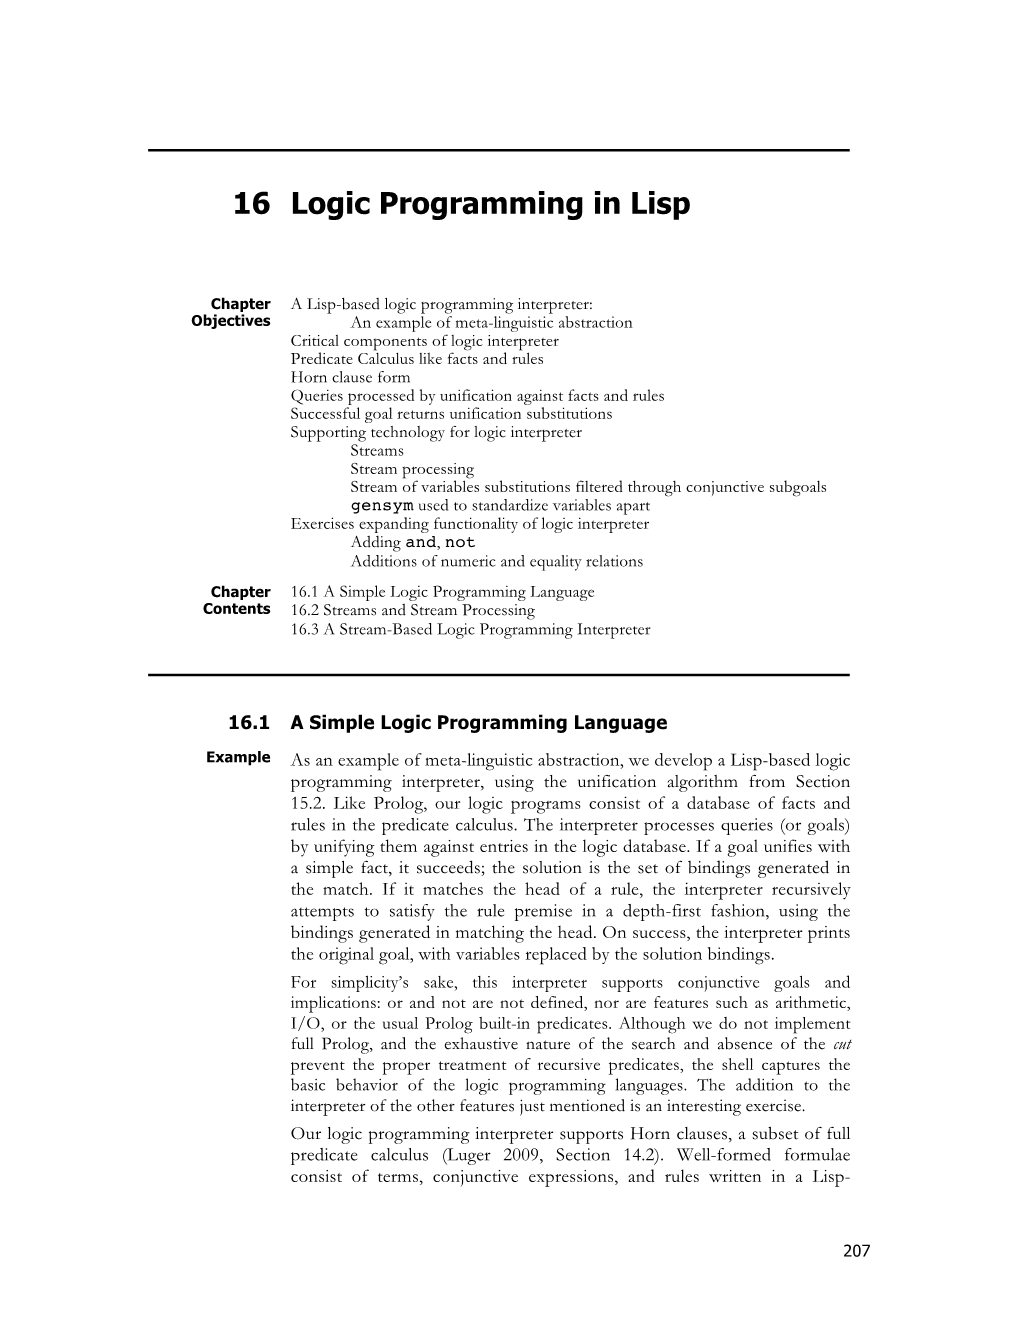 Logic Programming in Lisp